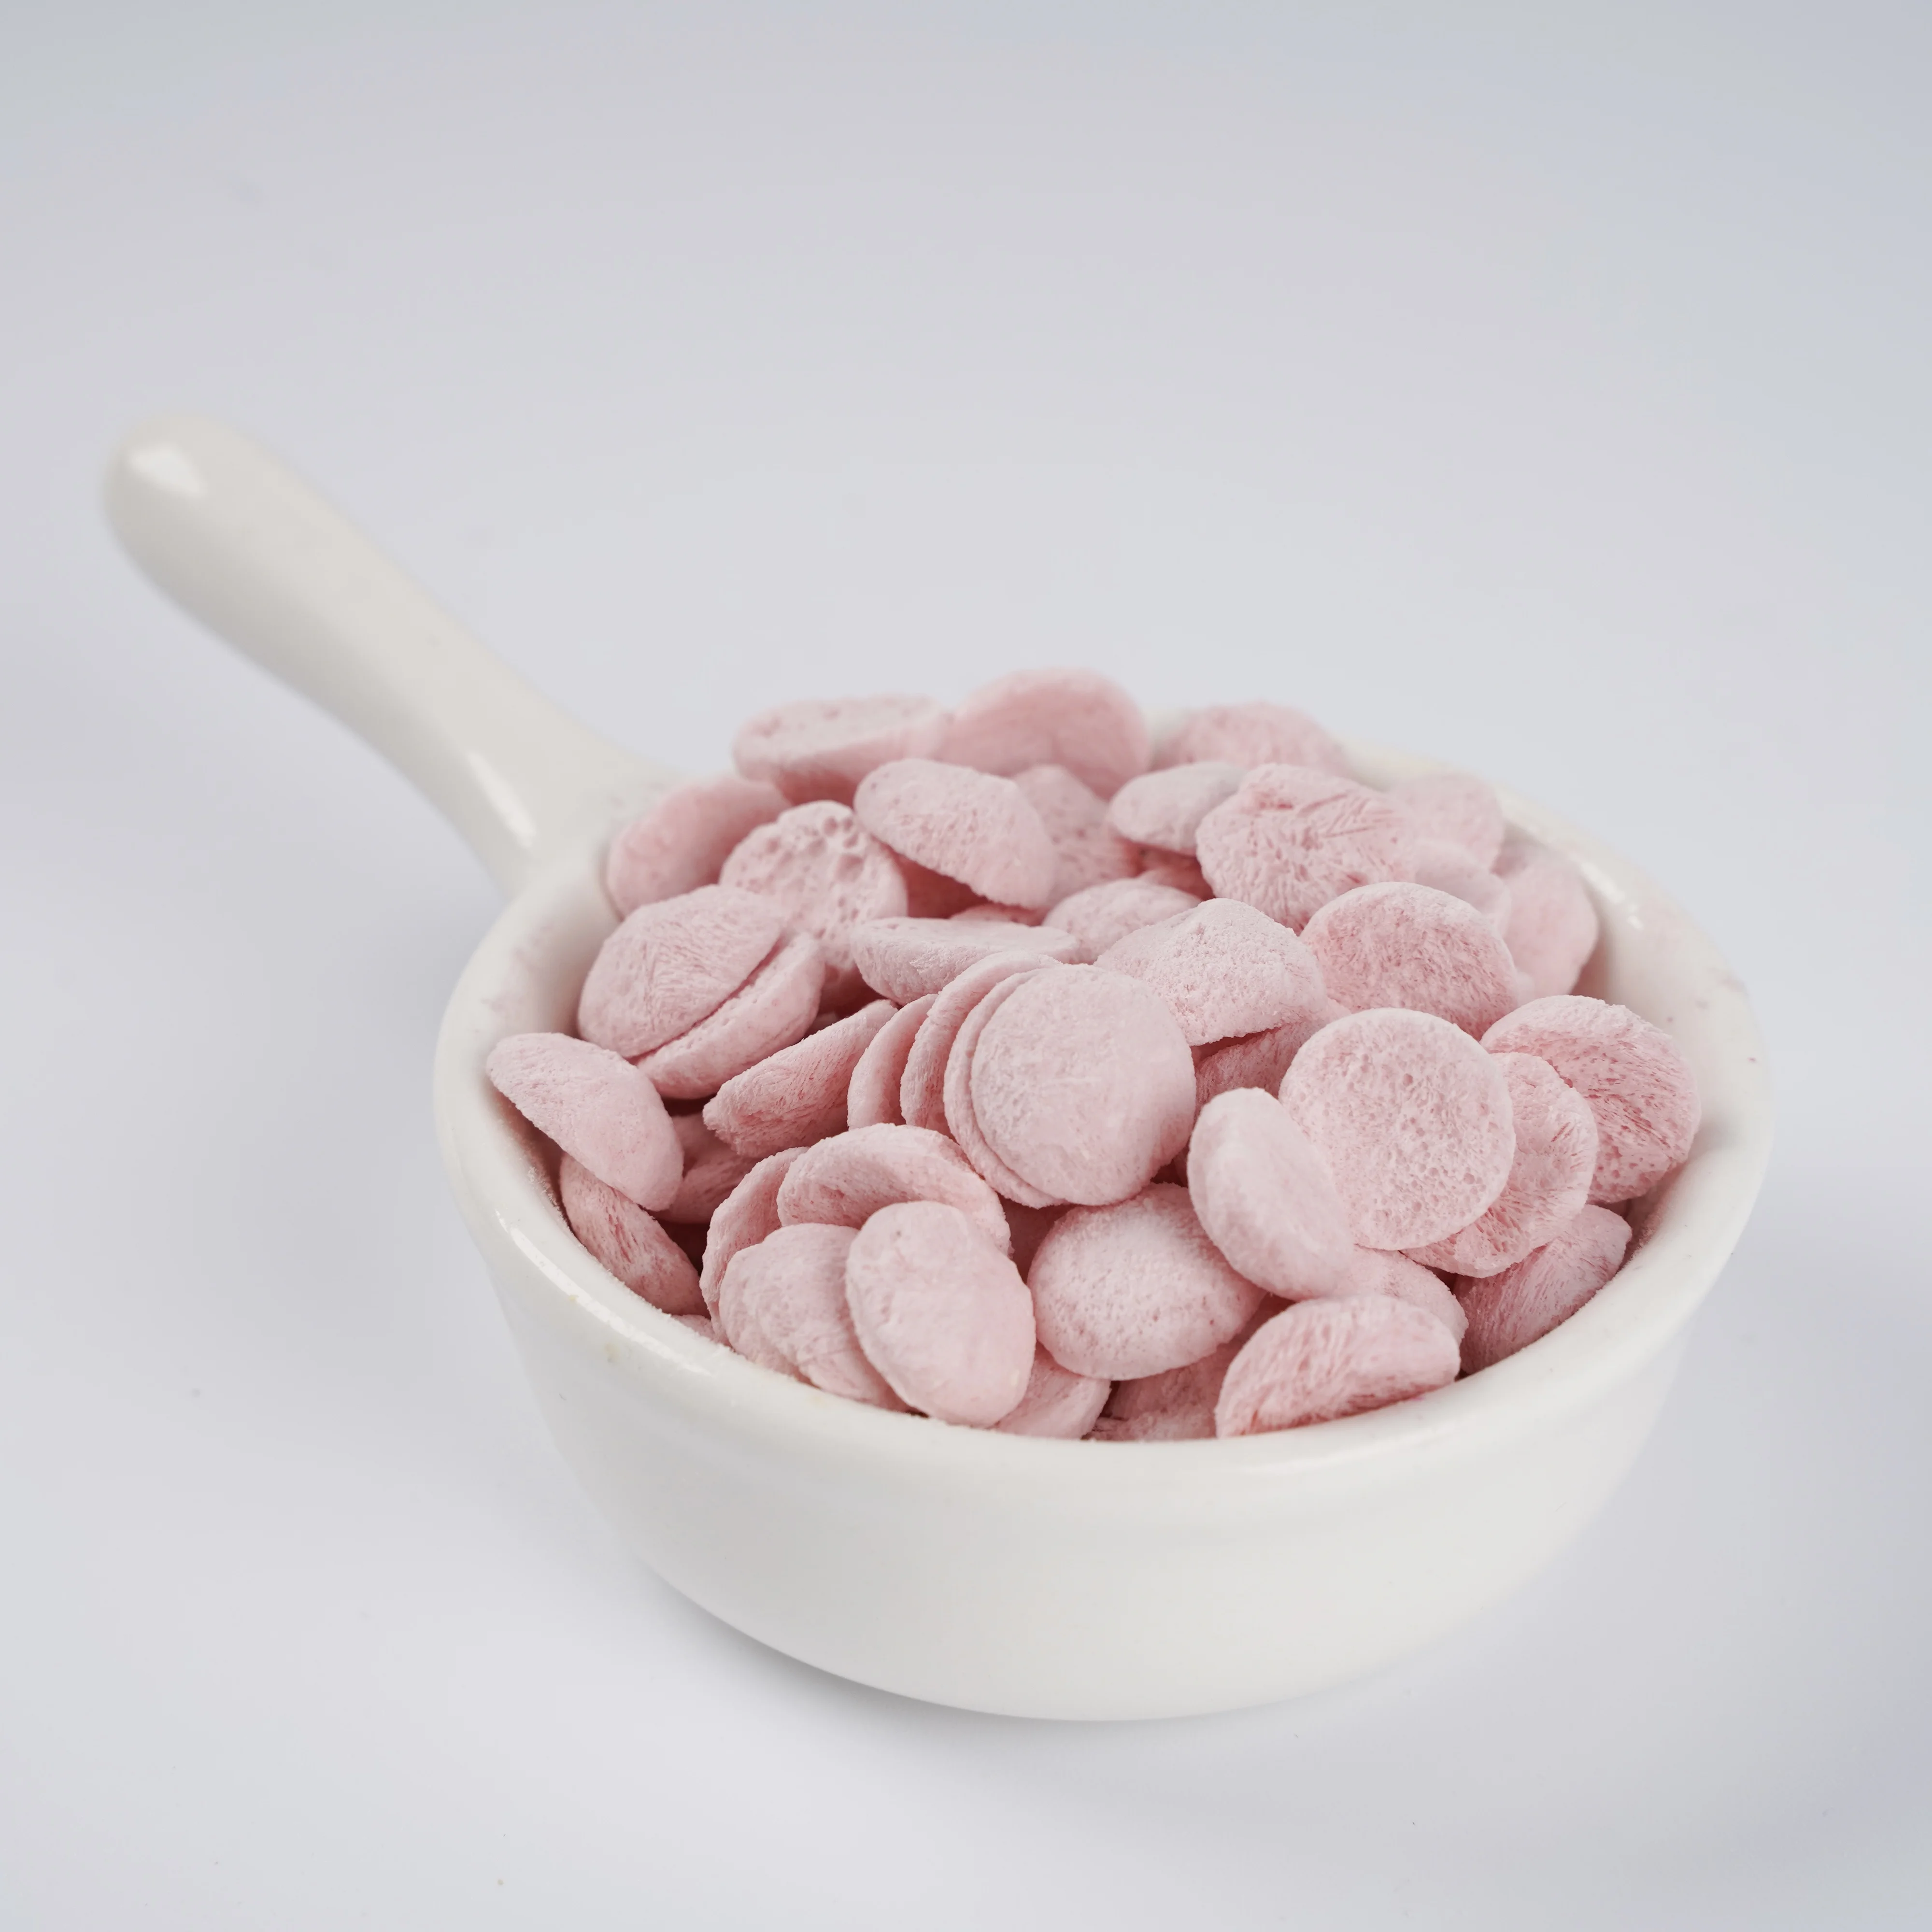 Popular Low MOQ Healthy Food OEM ODM quality nutritious infant snack Probiotics freeze-dried fruit yogurt candy melts